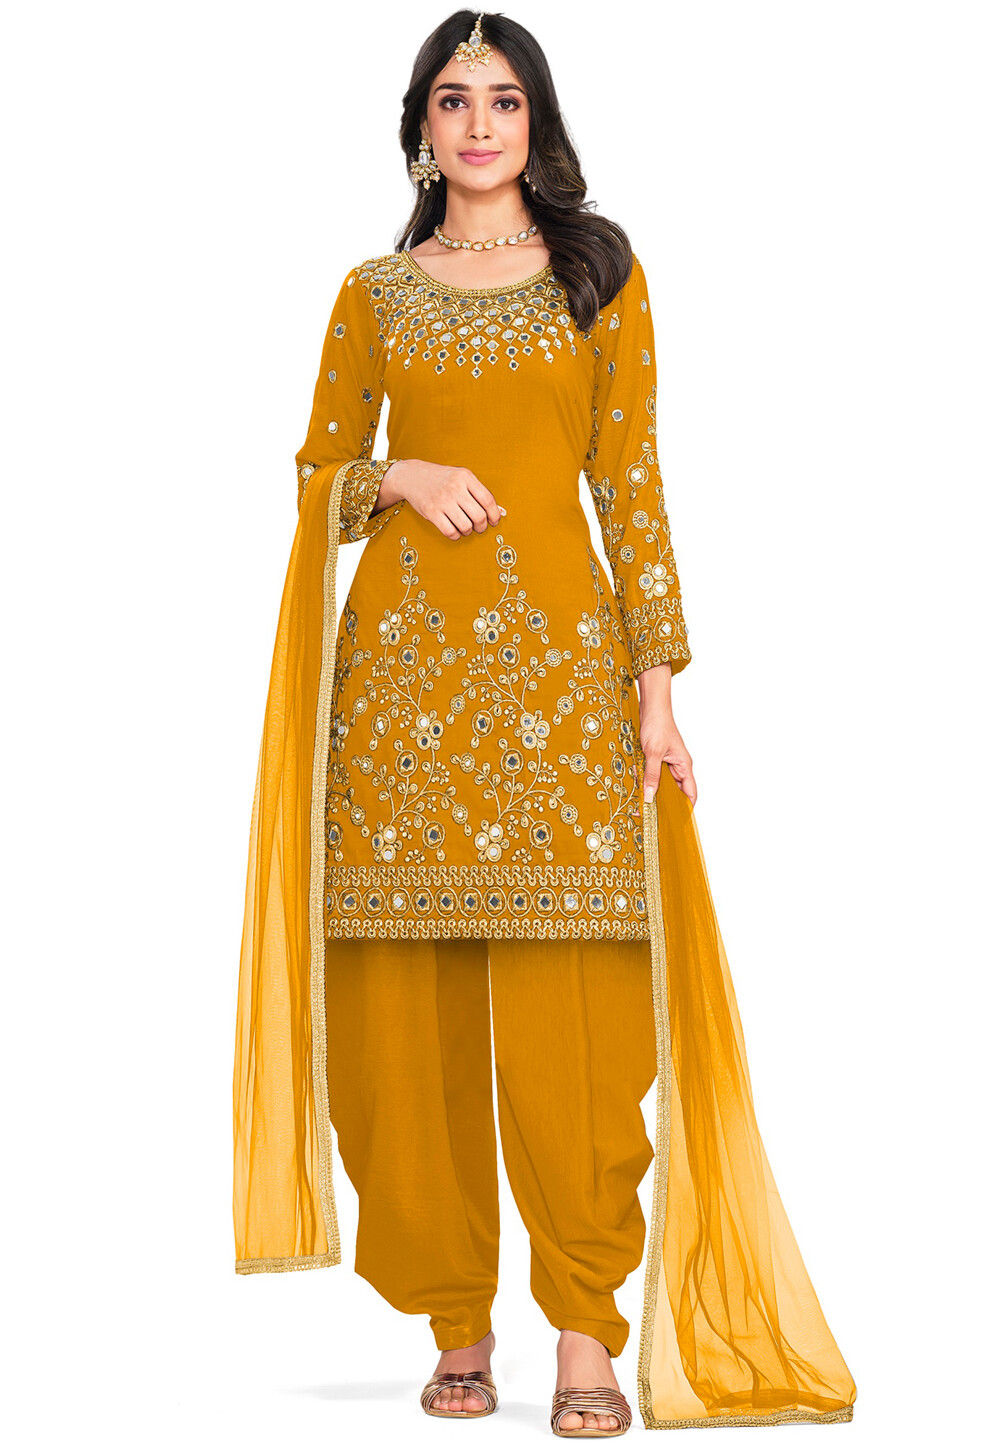 Top more than 220 new punjabi suit colour latest